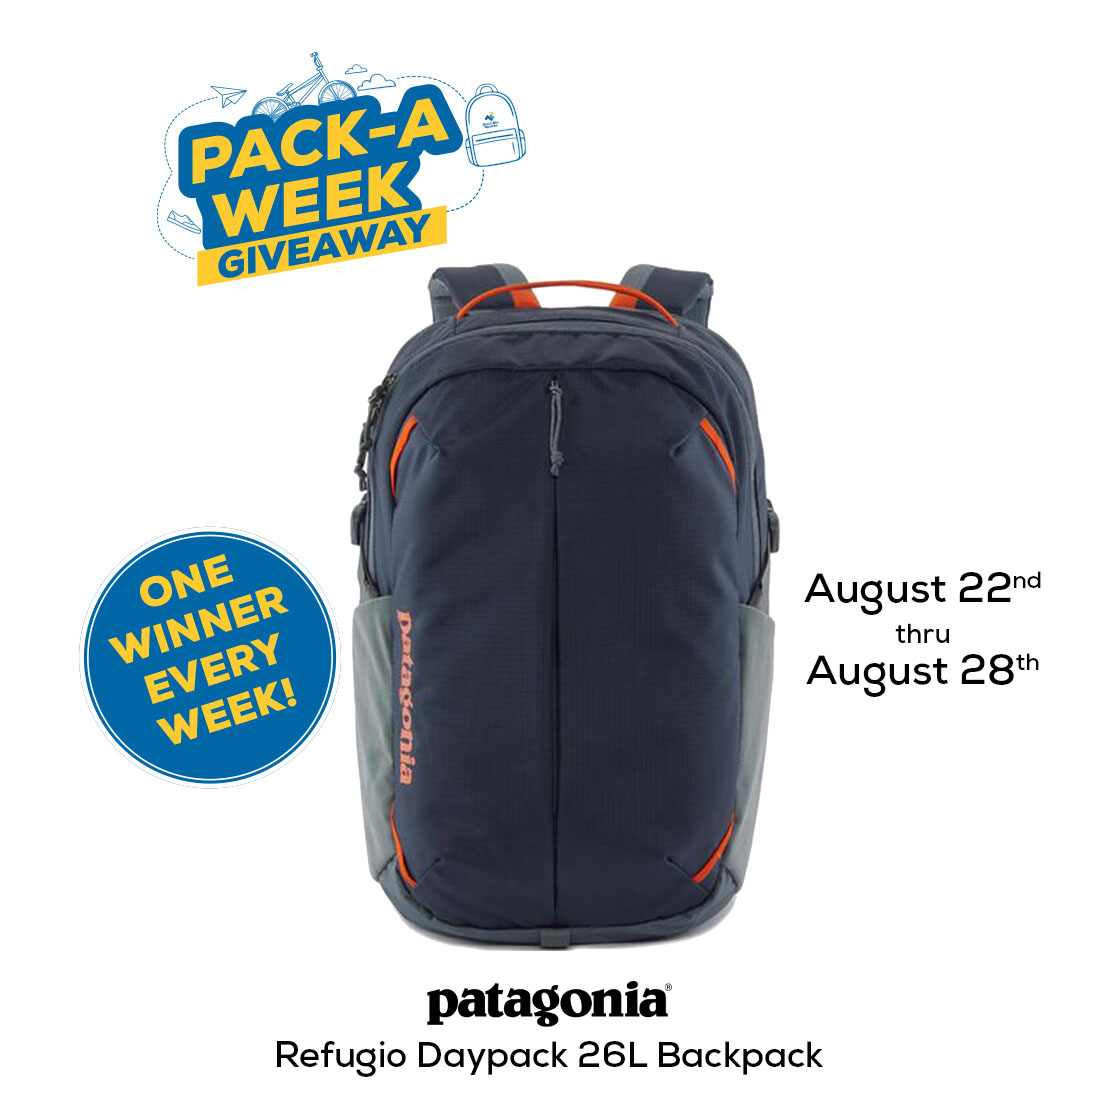 Patagonia Refugio Daypack 26L Backpack